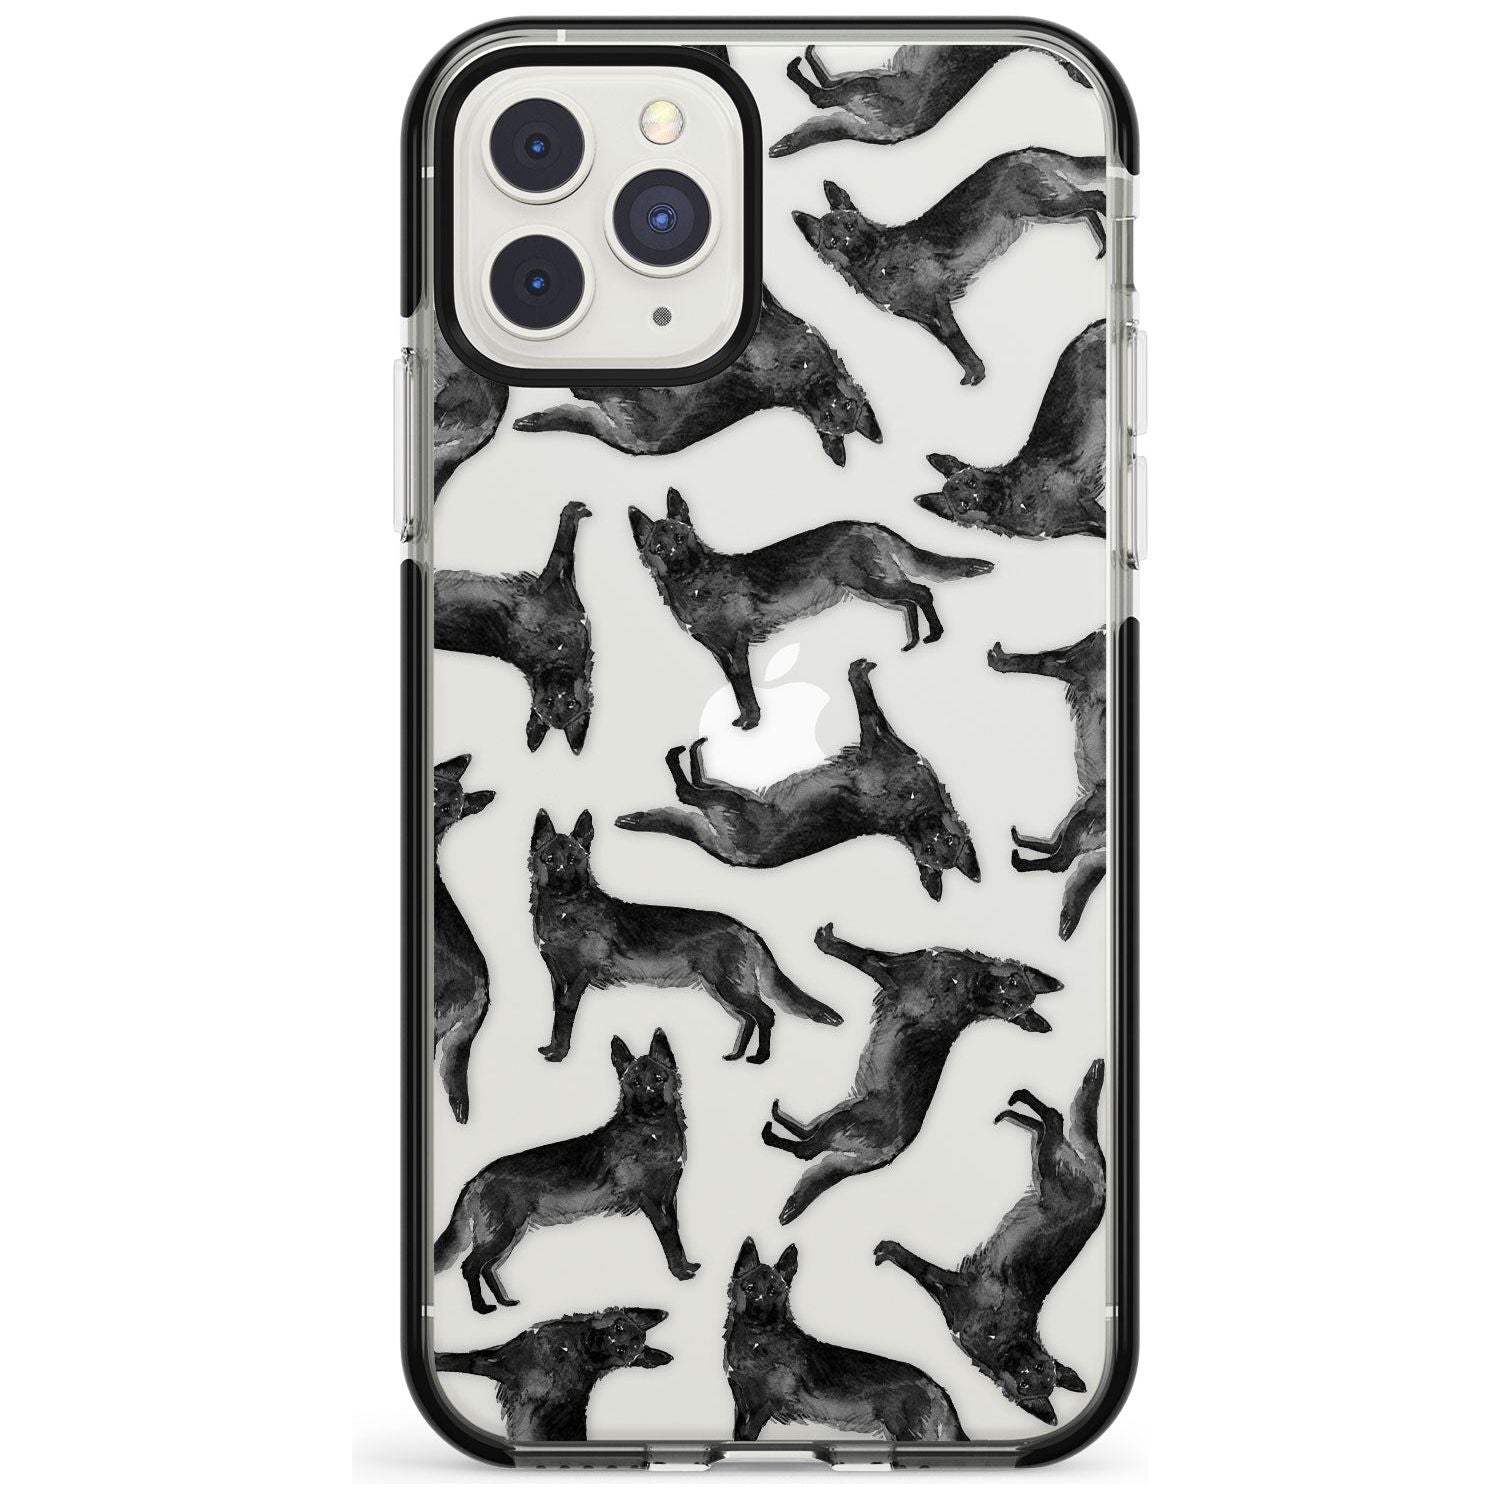 German Shepherd (Black) Watercolour Dog Pattern Black Impact Phone Case for iPhone 11 Pro Max